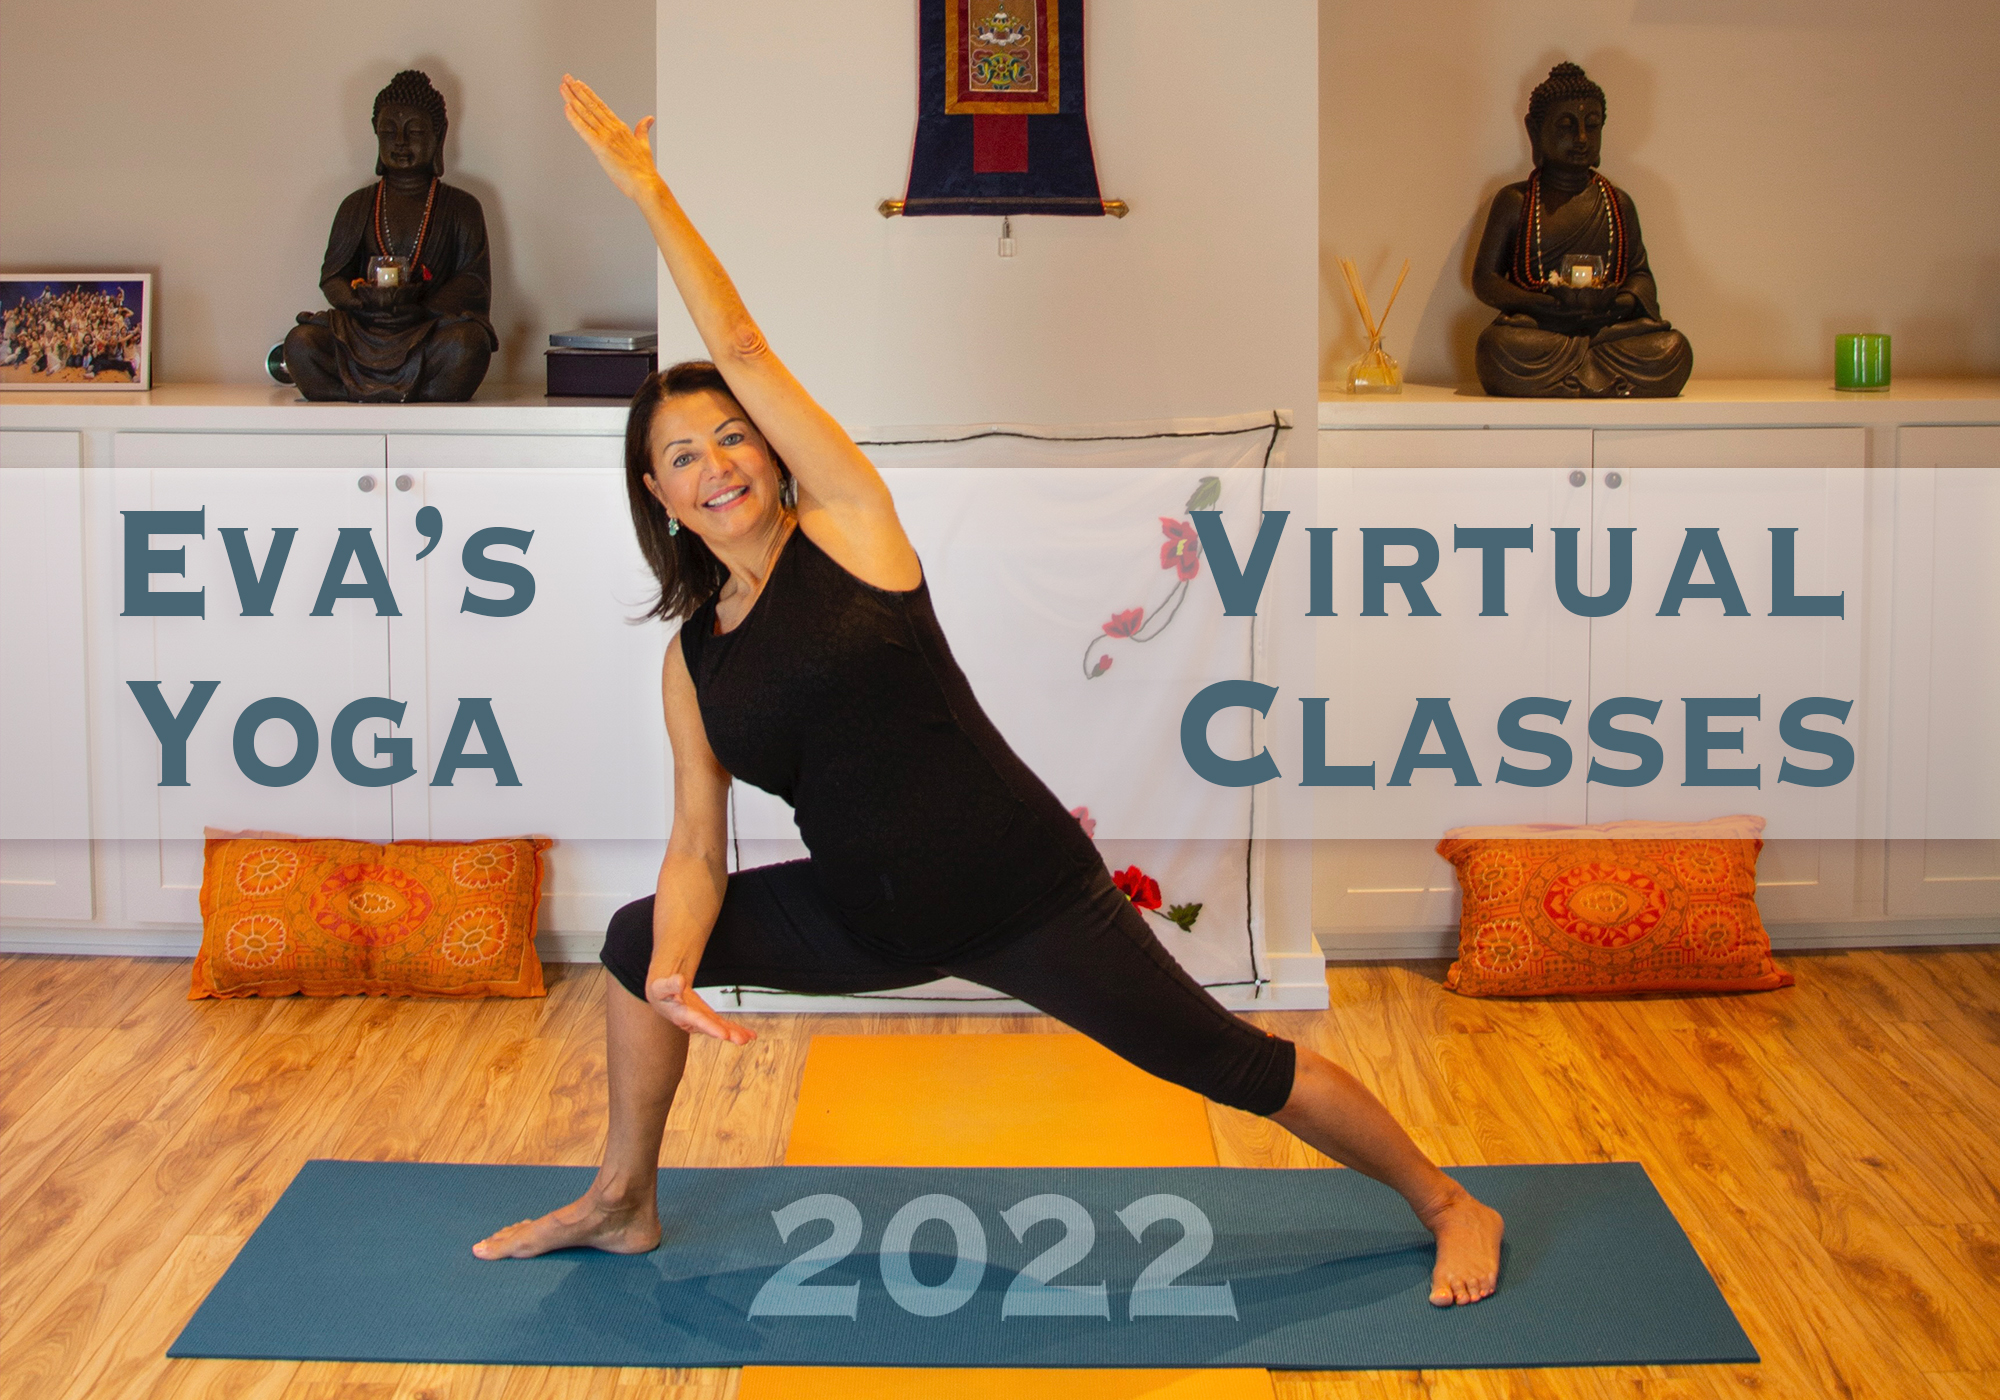 Eva's Yoga  Virtual classes with Eva